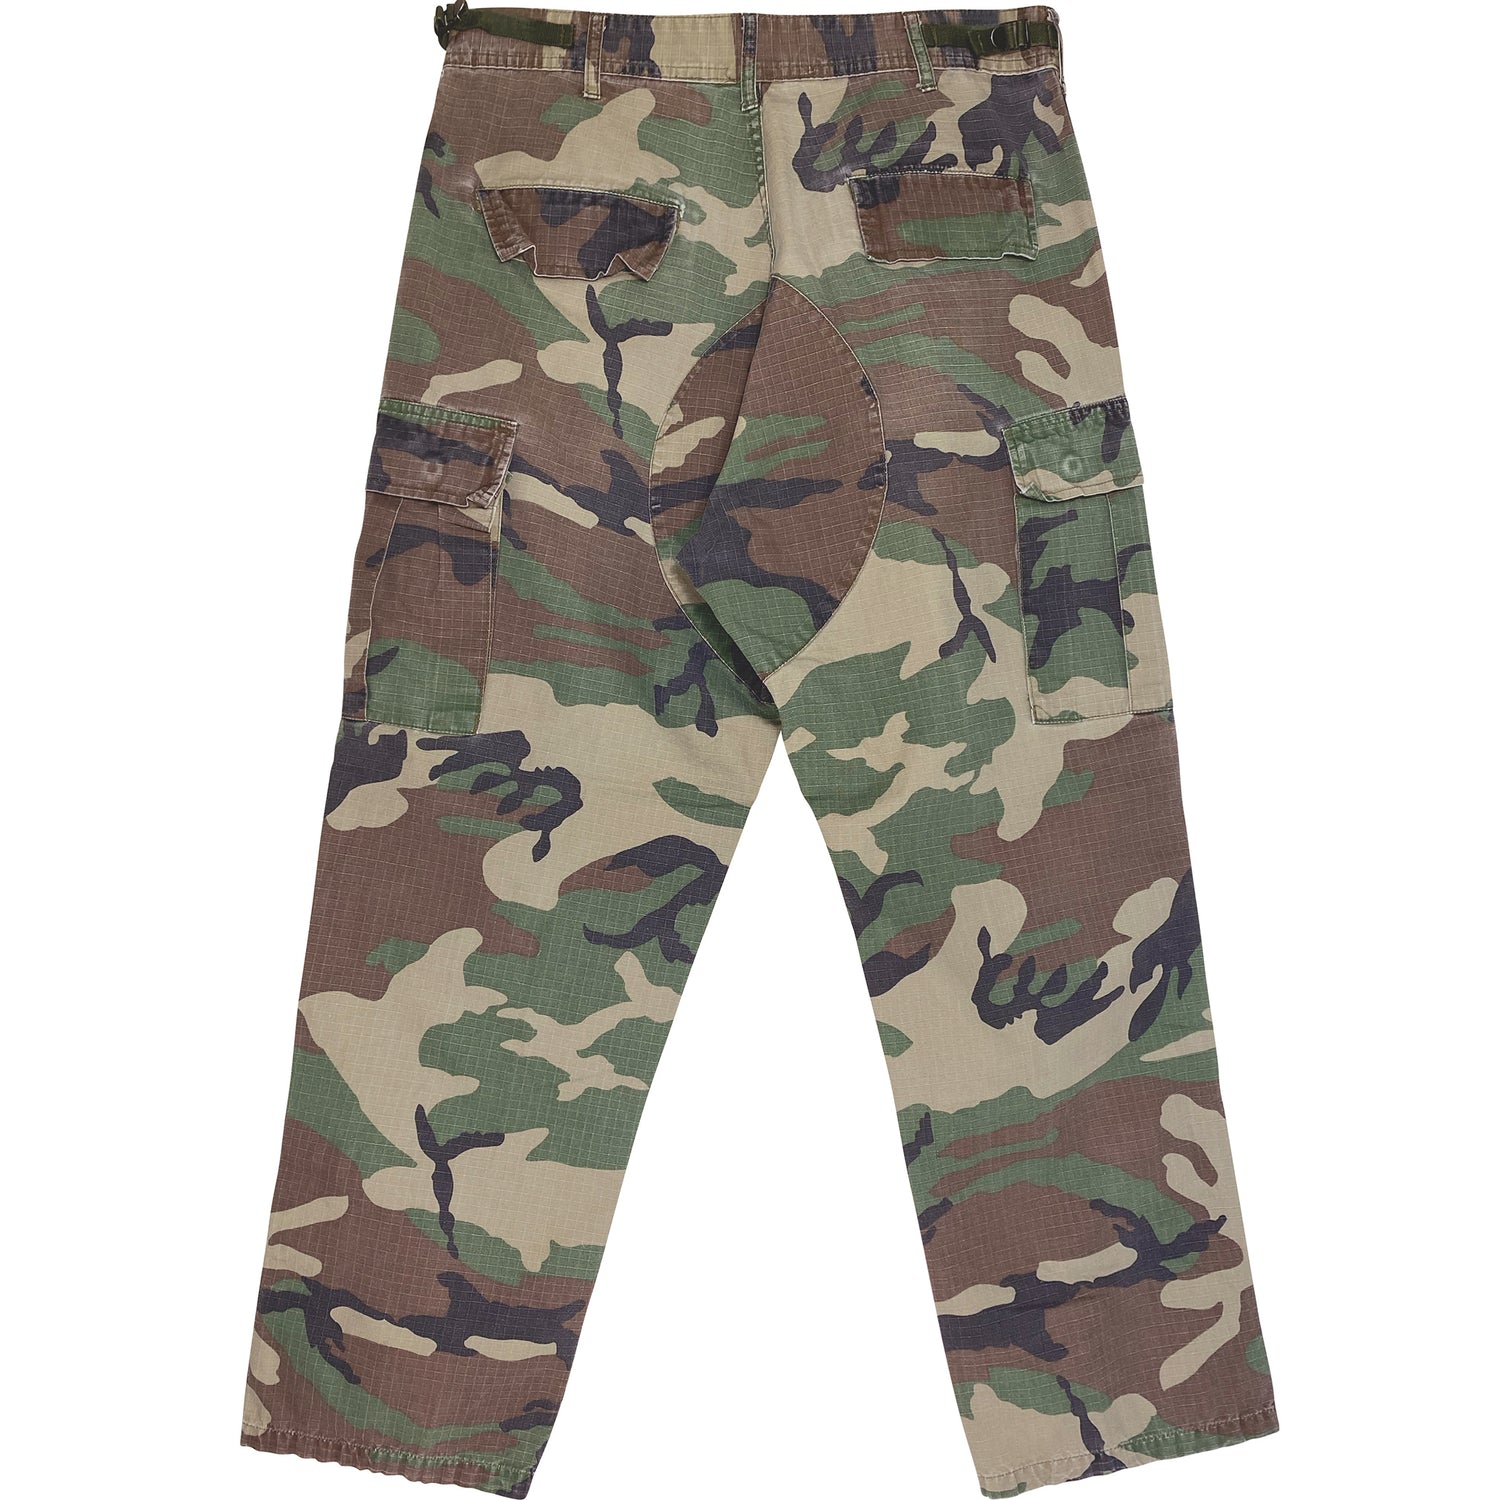 Vintage Army Pants - Size 31